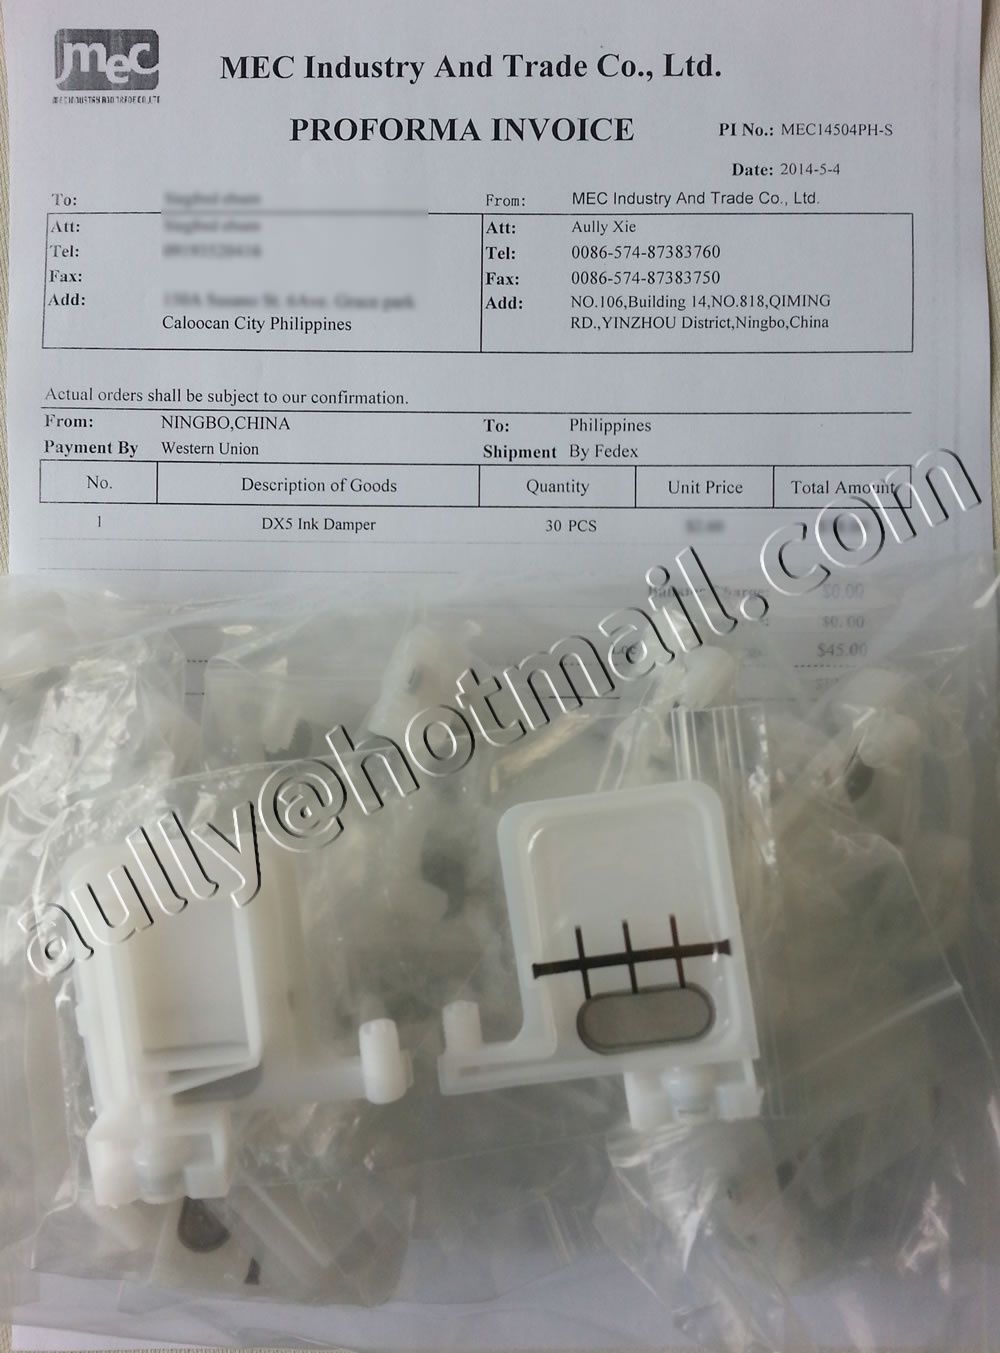 Order MEC14504PH-S (DX5 ink damper) to Philippines